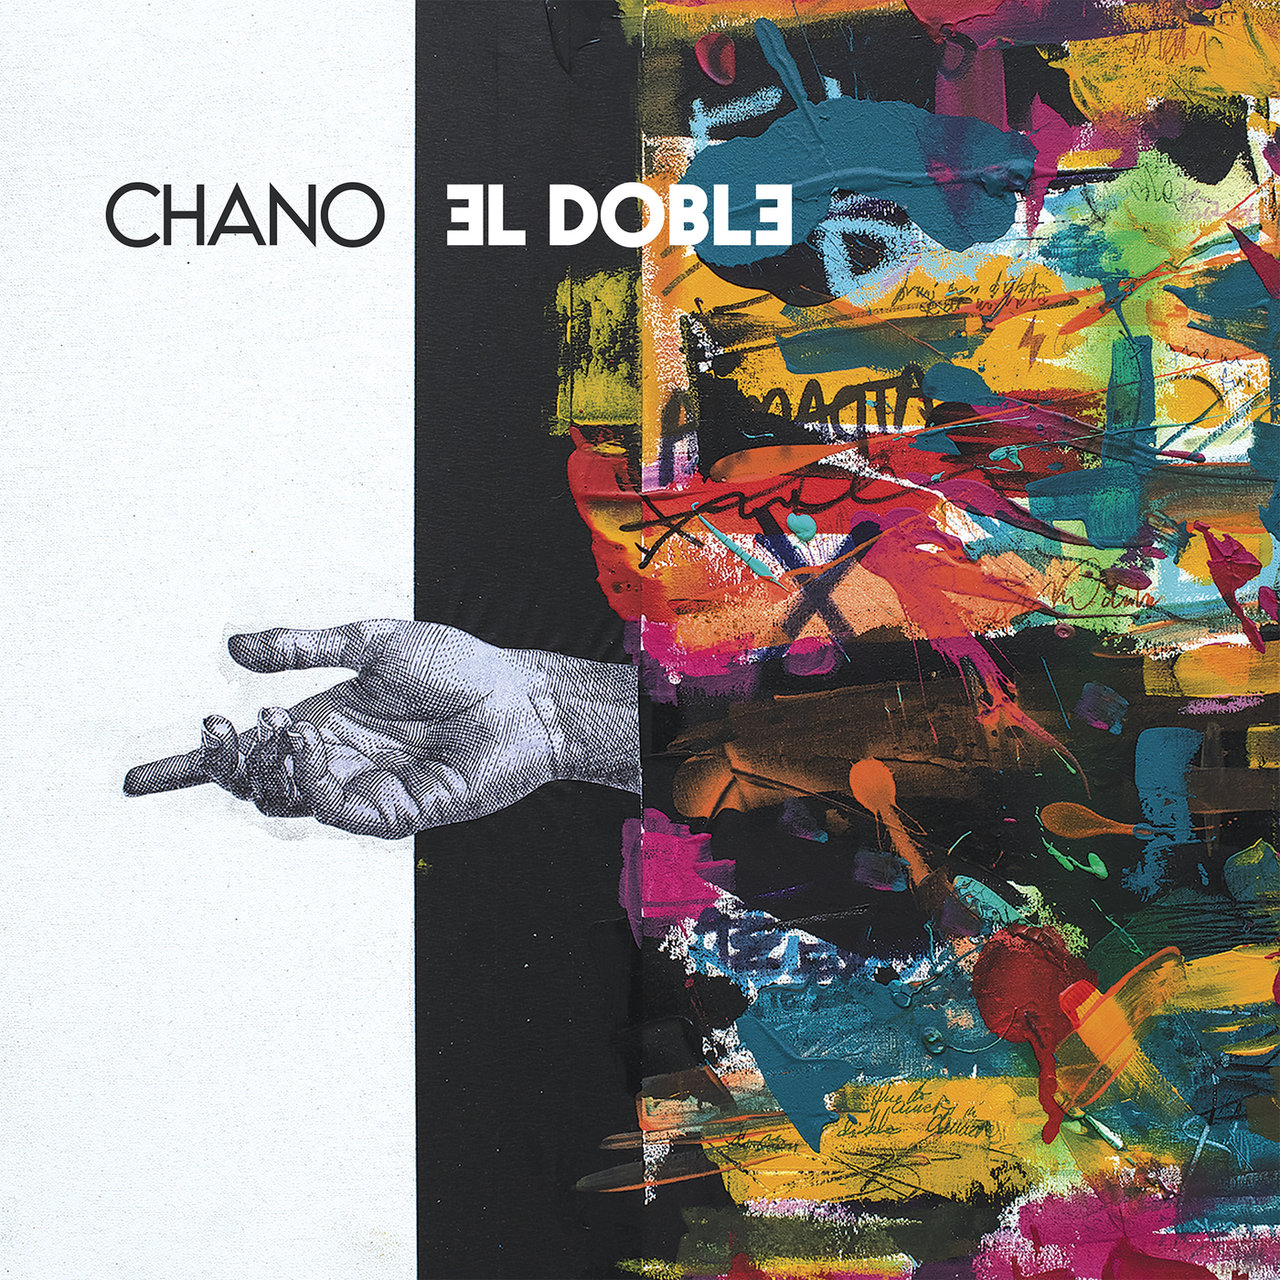 Chano El Doble cover artwork